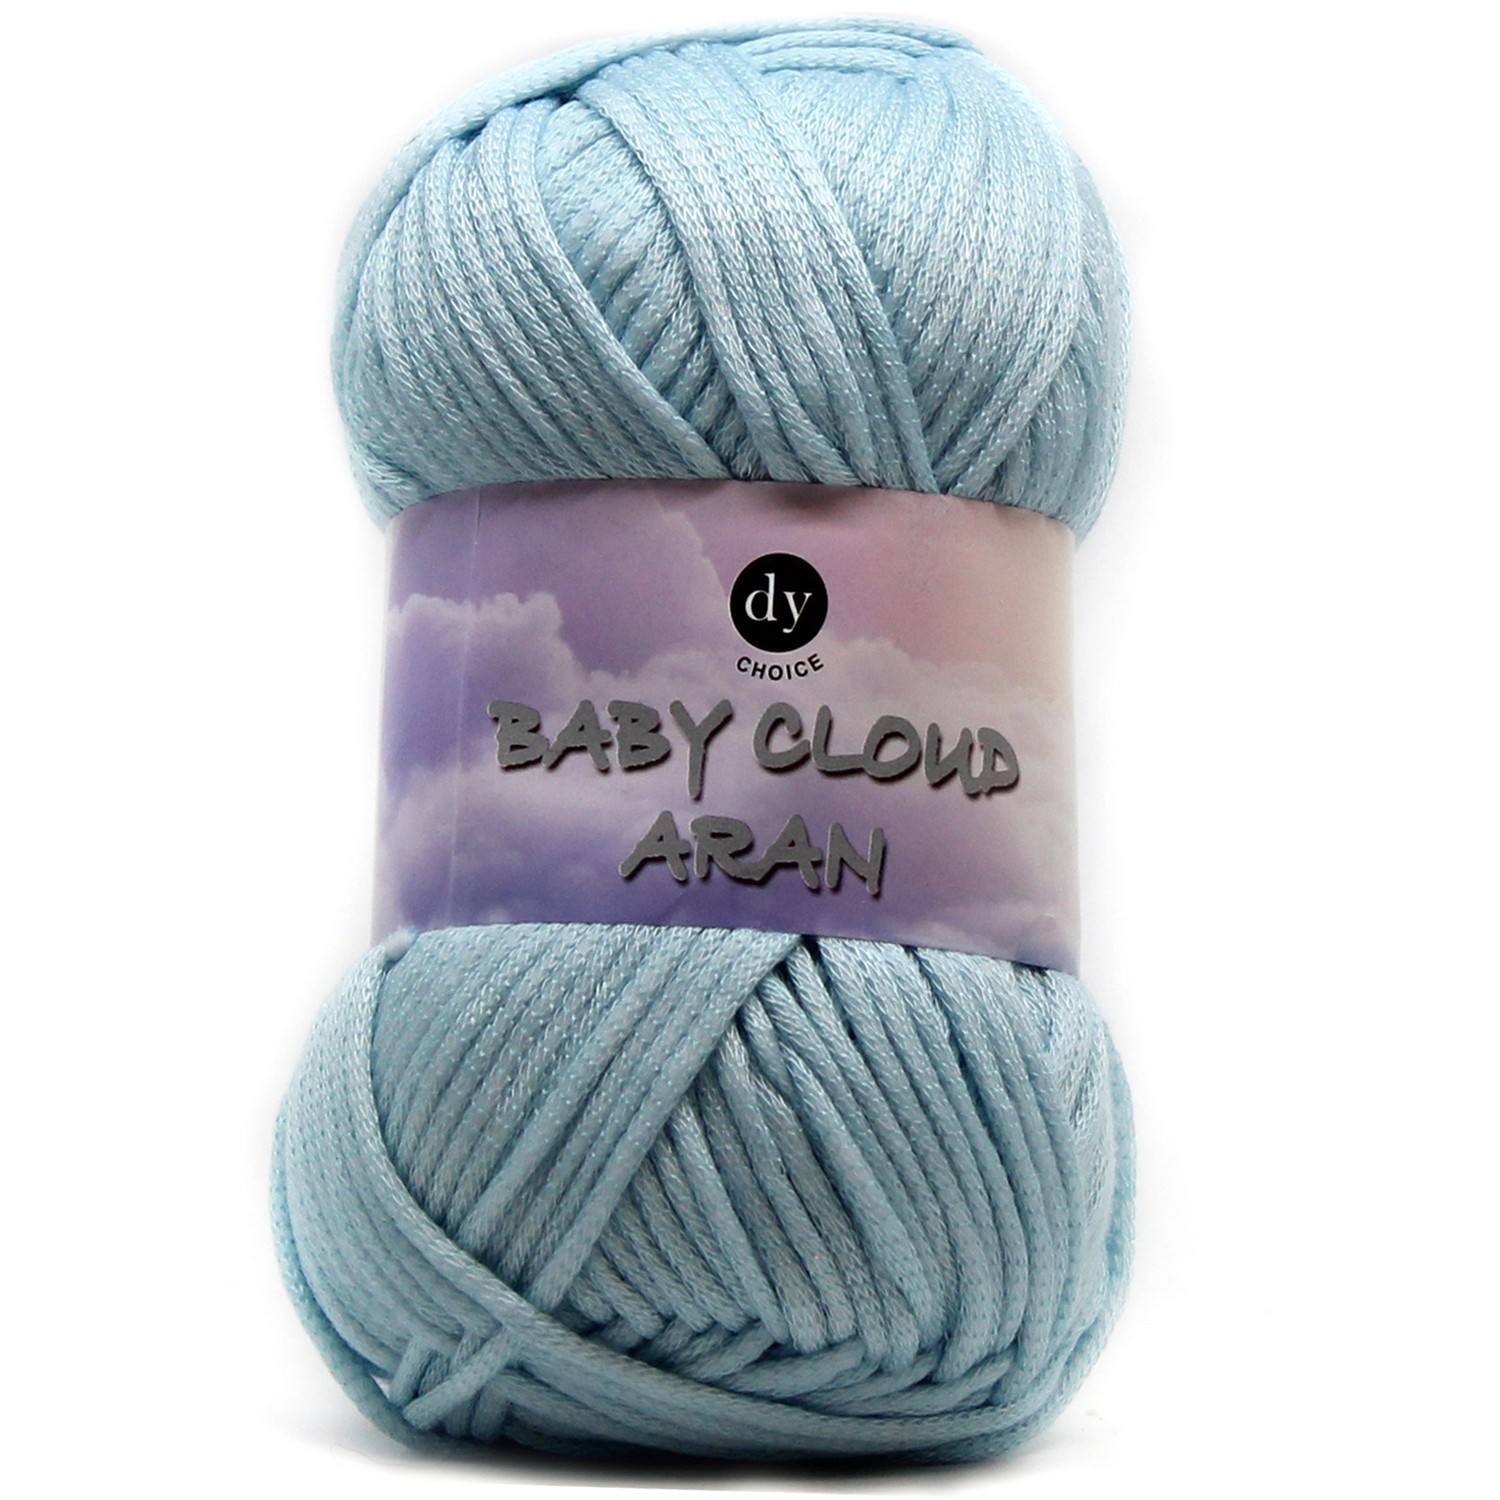 DY Choice Baby Cloud Aran 